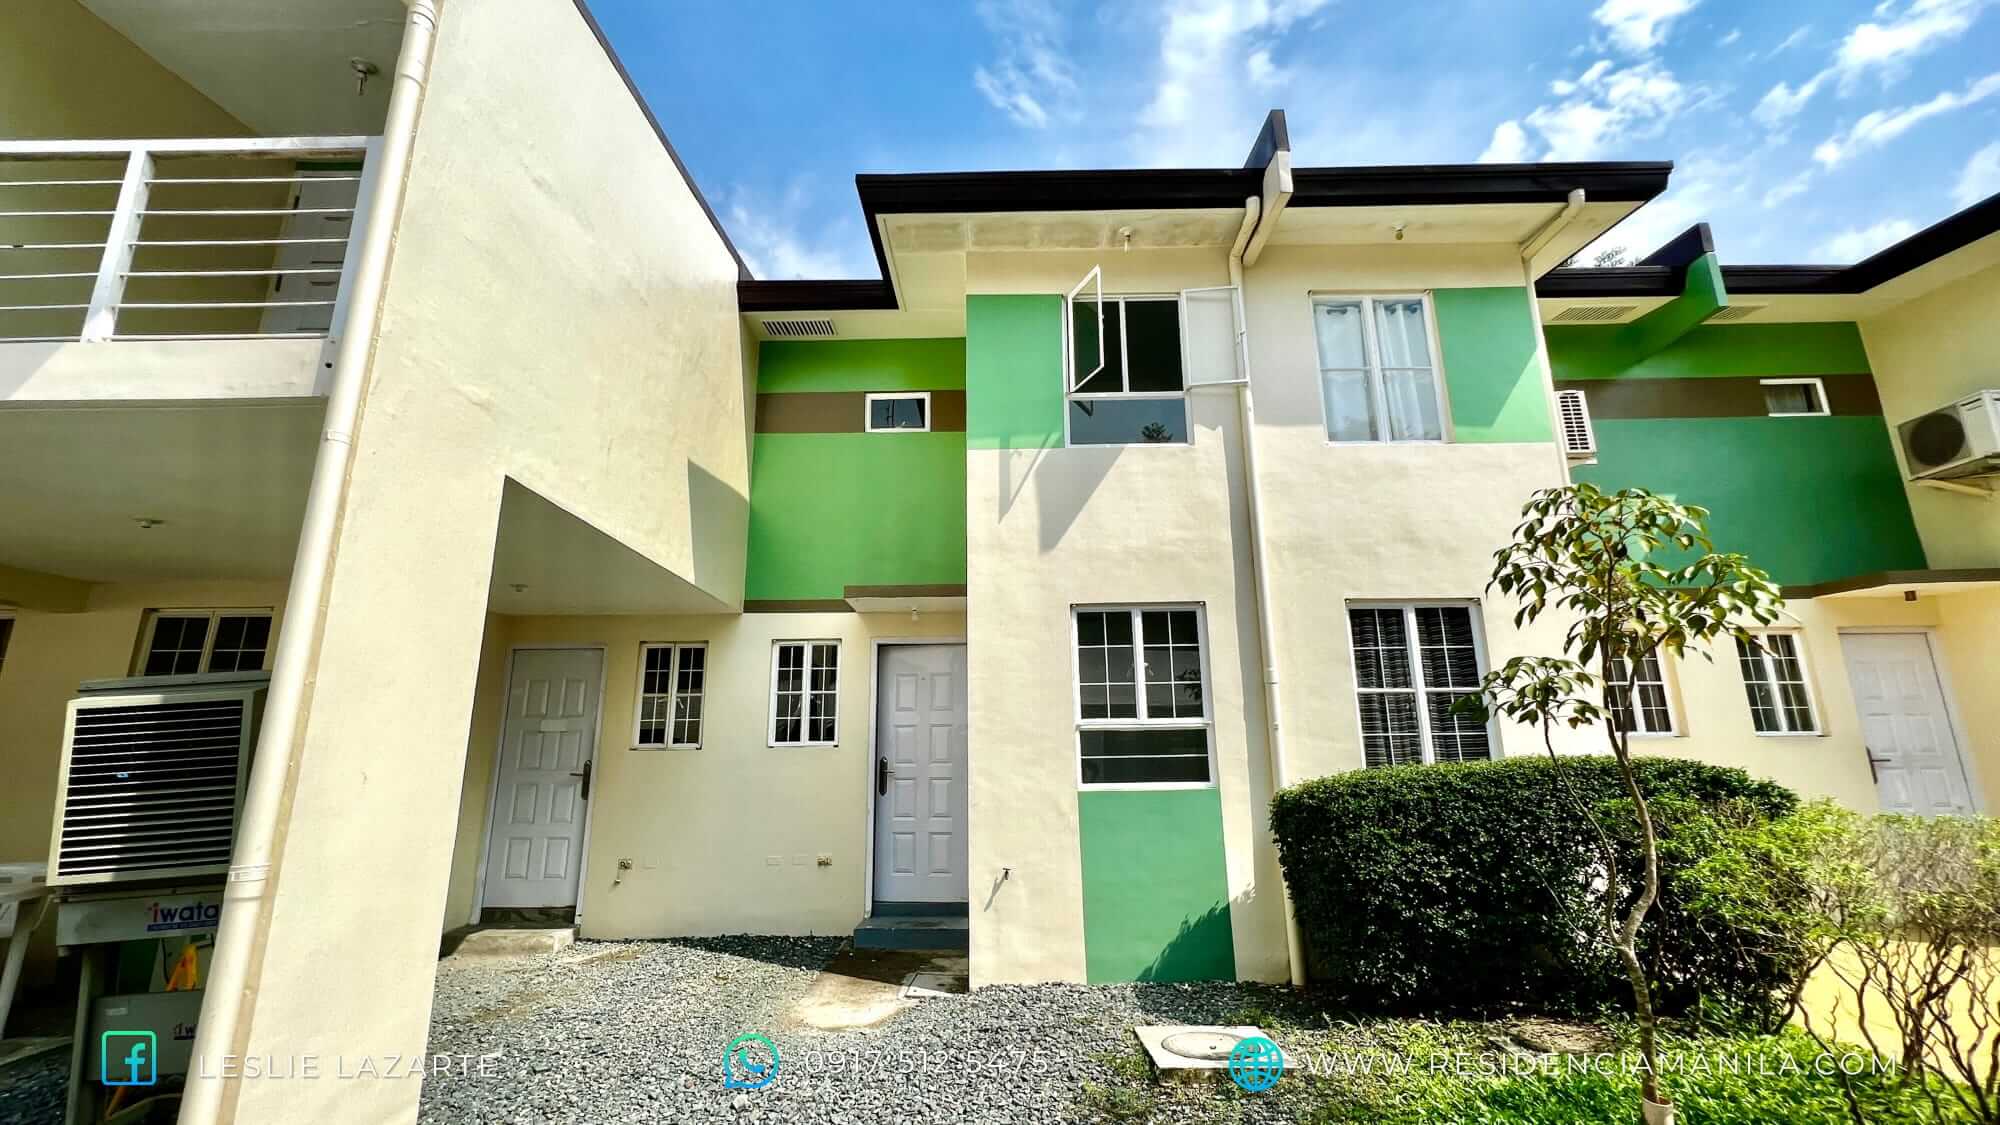 Photo of Micara Estates - Portia Model | Affordable Pagibig House and Lot Tanza Cavite | PROFRIENDS Inc